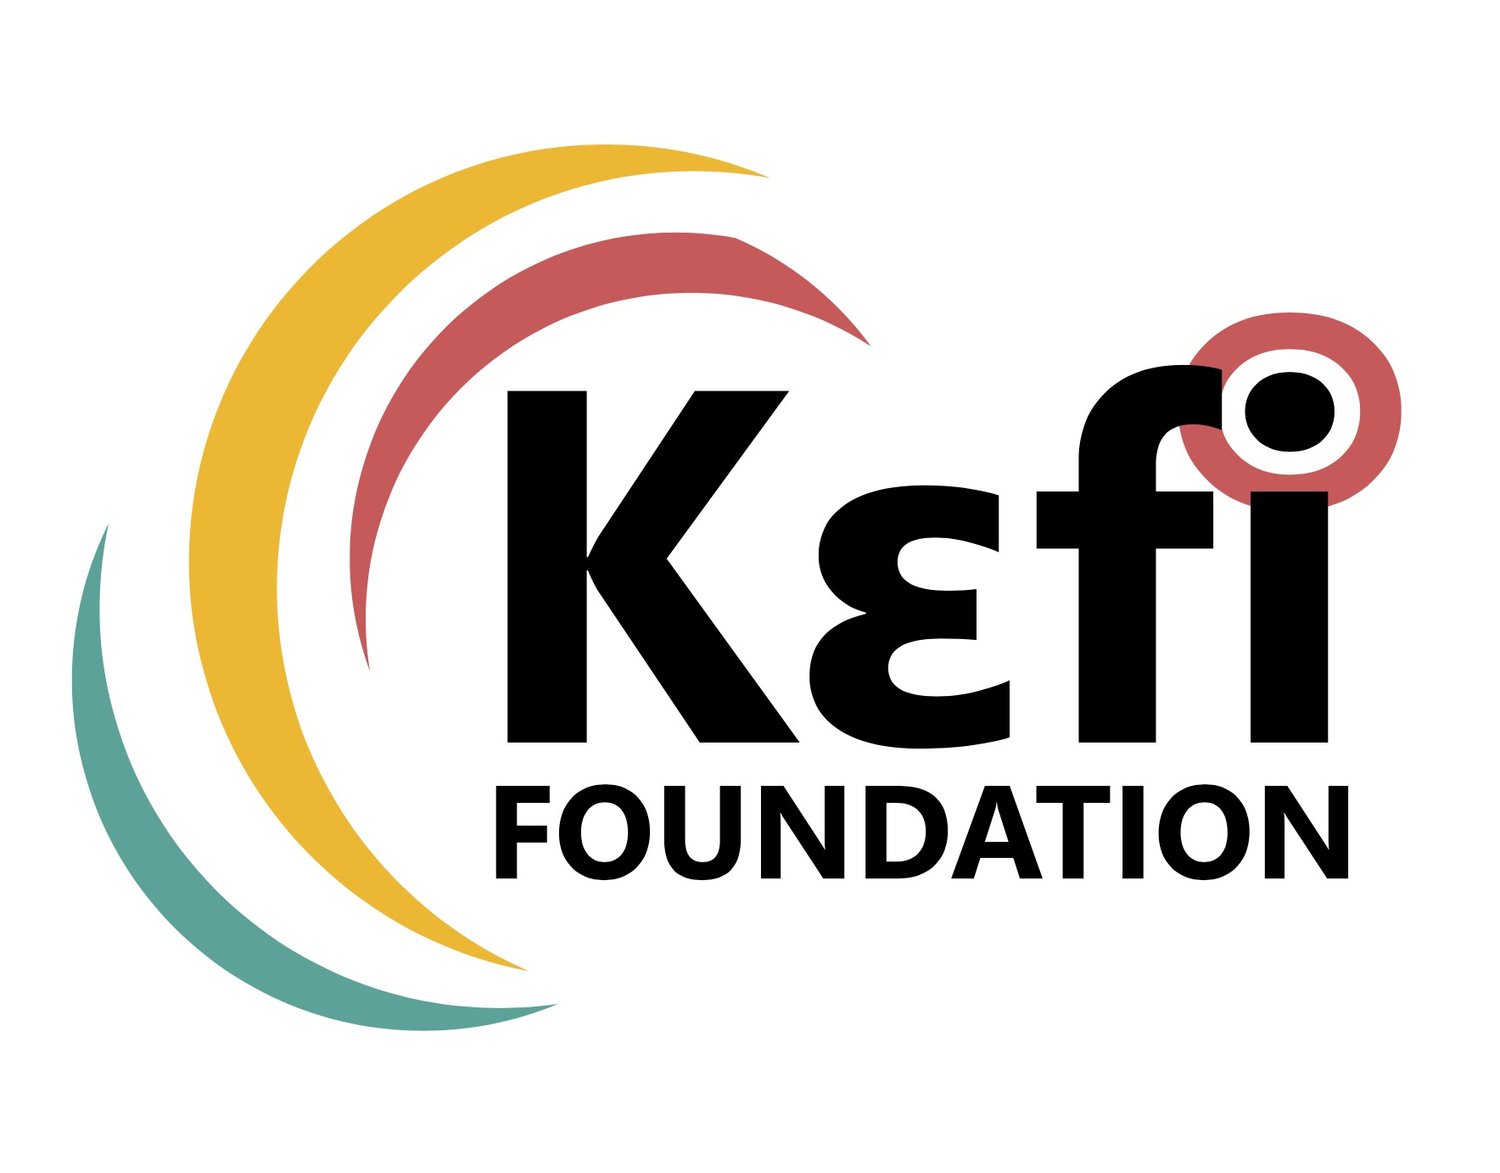 The Kefi Foundation